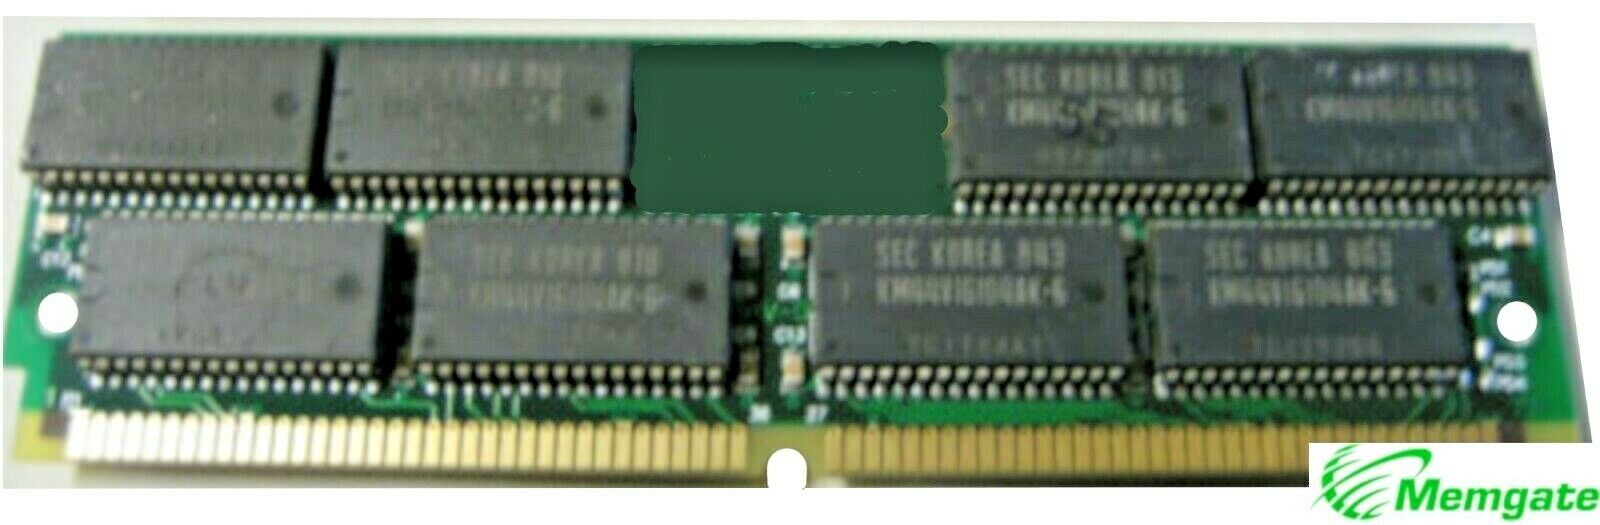 128MB EDO 72 Pin SIMM Memory Ram For Amiga 1200 with DKB Cobra Processor card